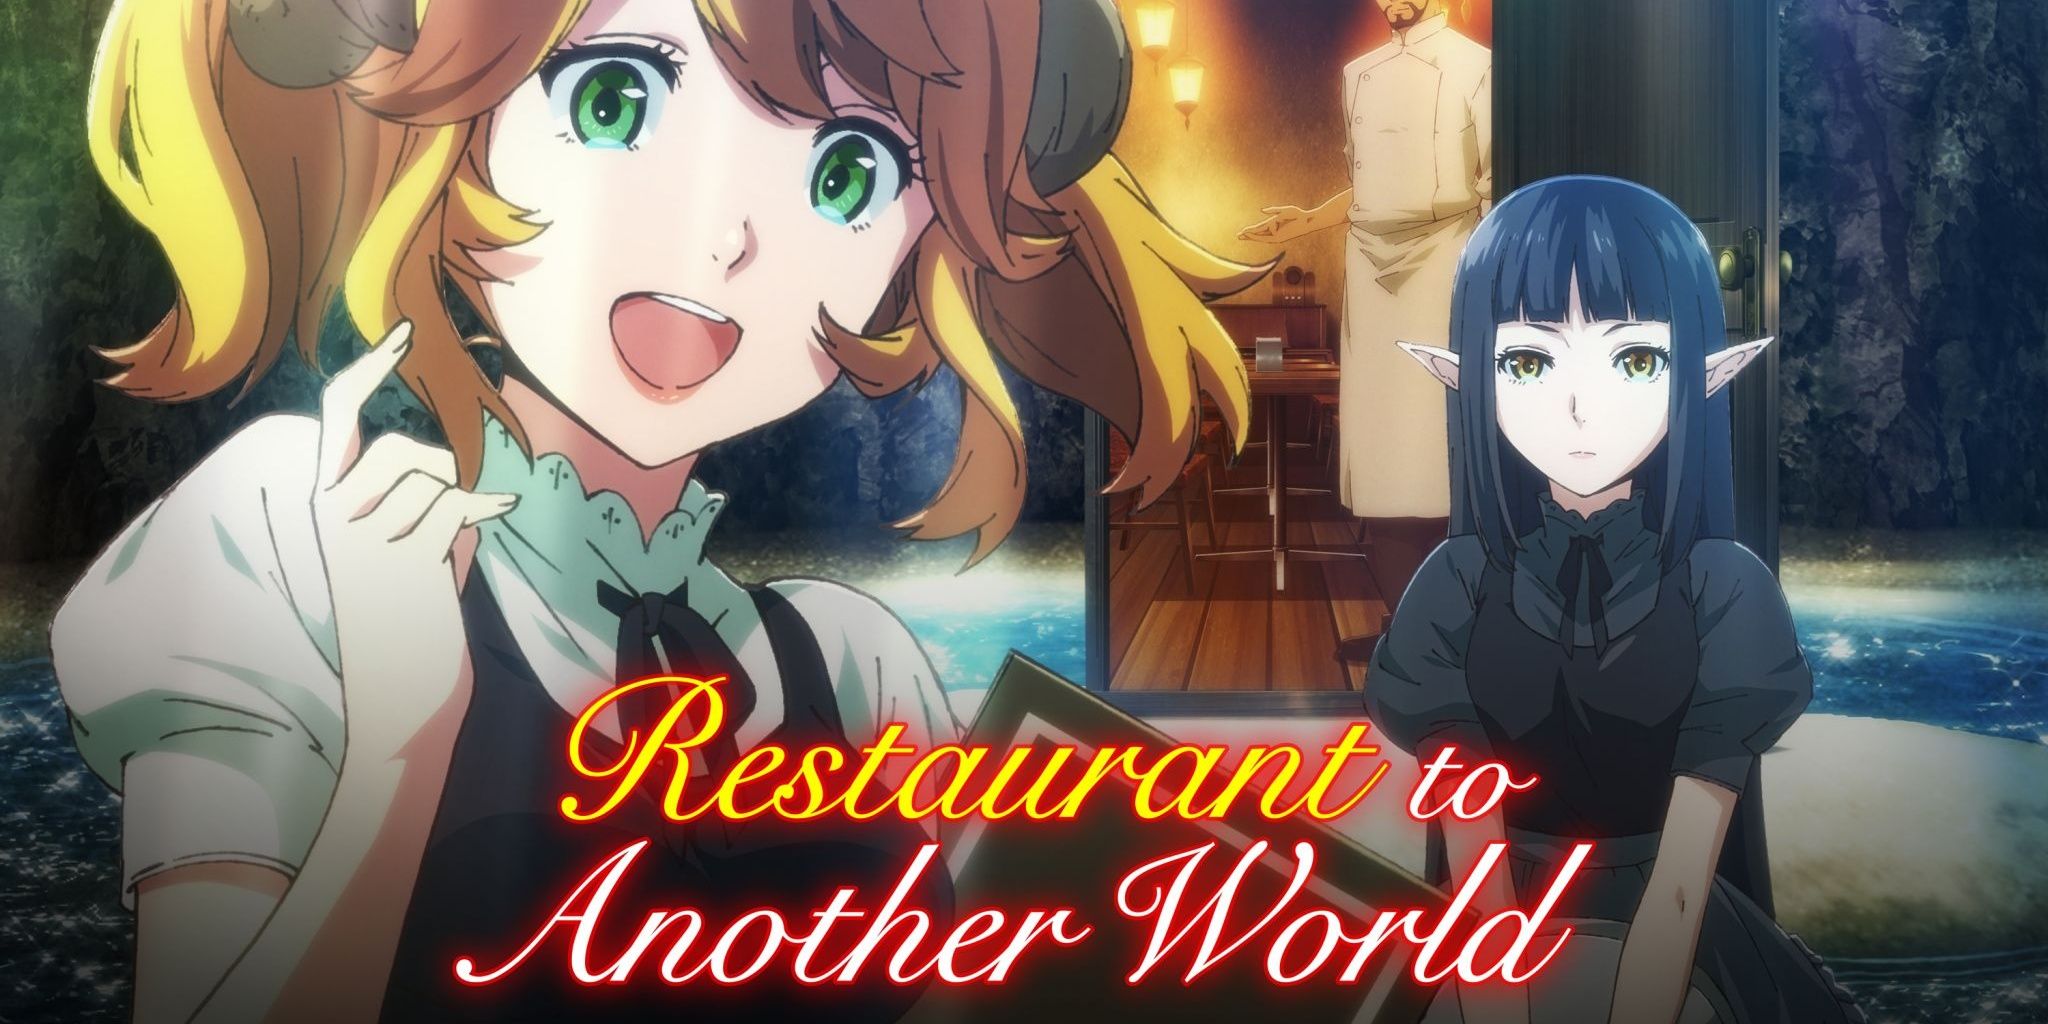 Arte principal do anime Restaurant to Another World